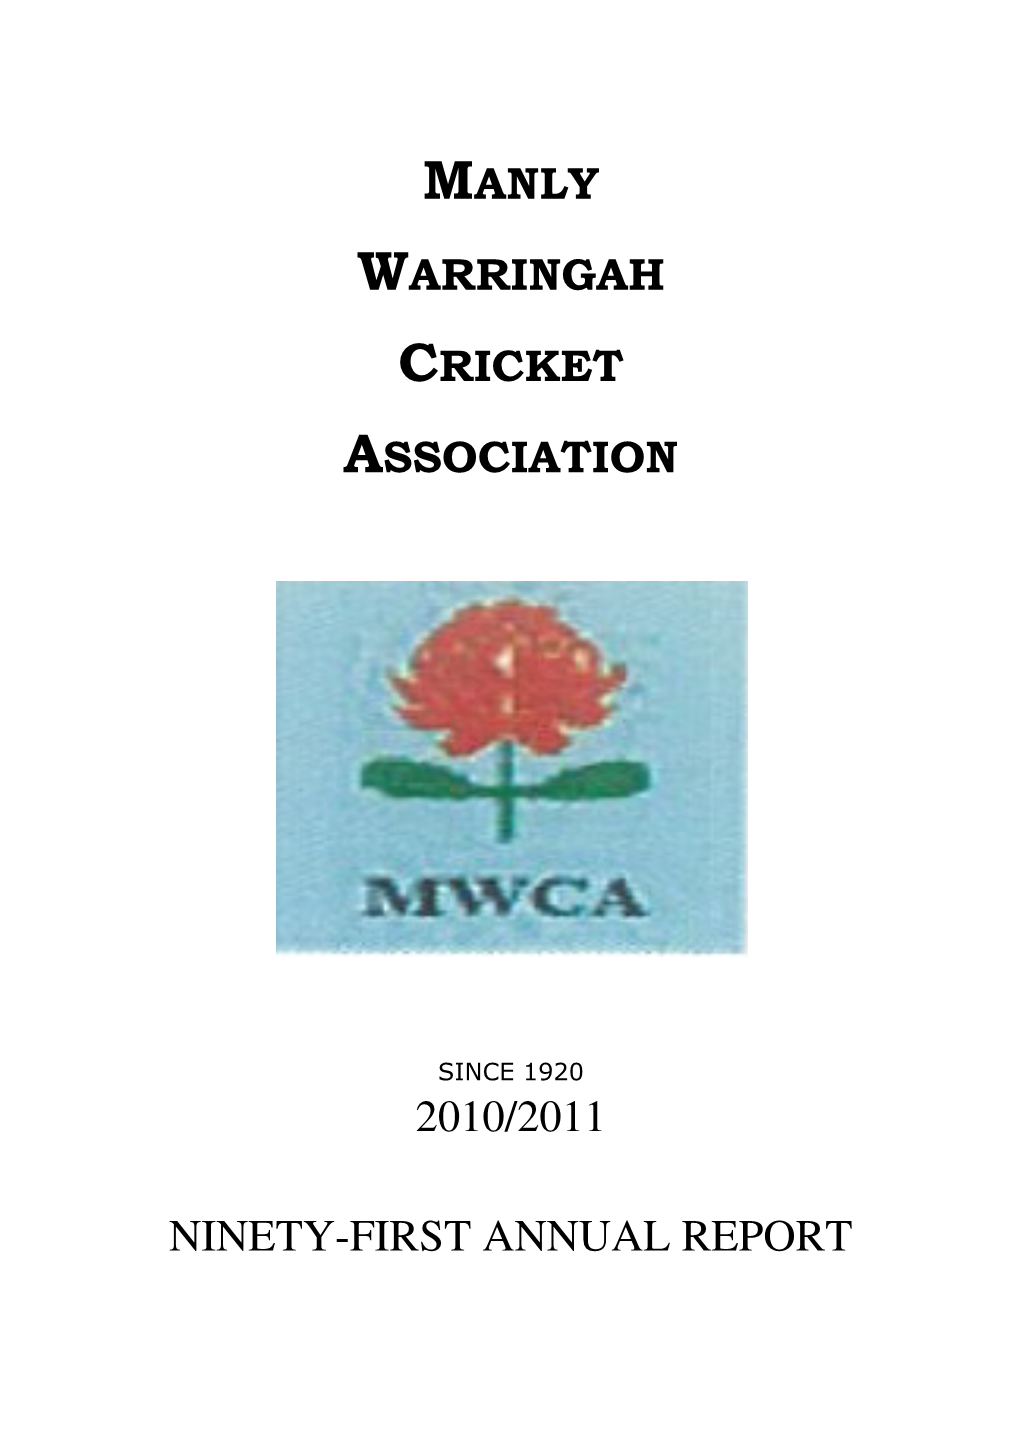 Manly Warringah Cricket Association 2010/2011 Ninety